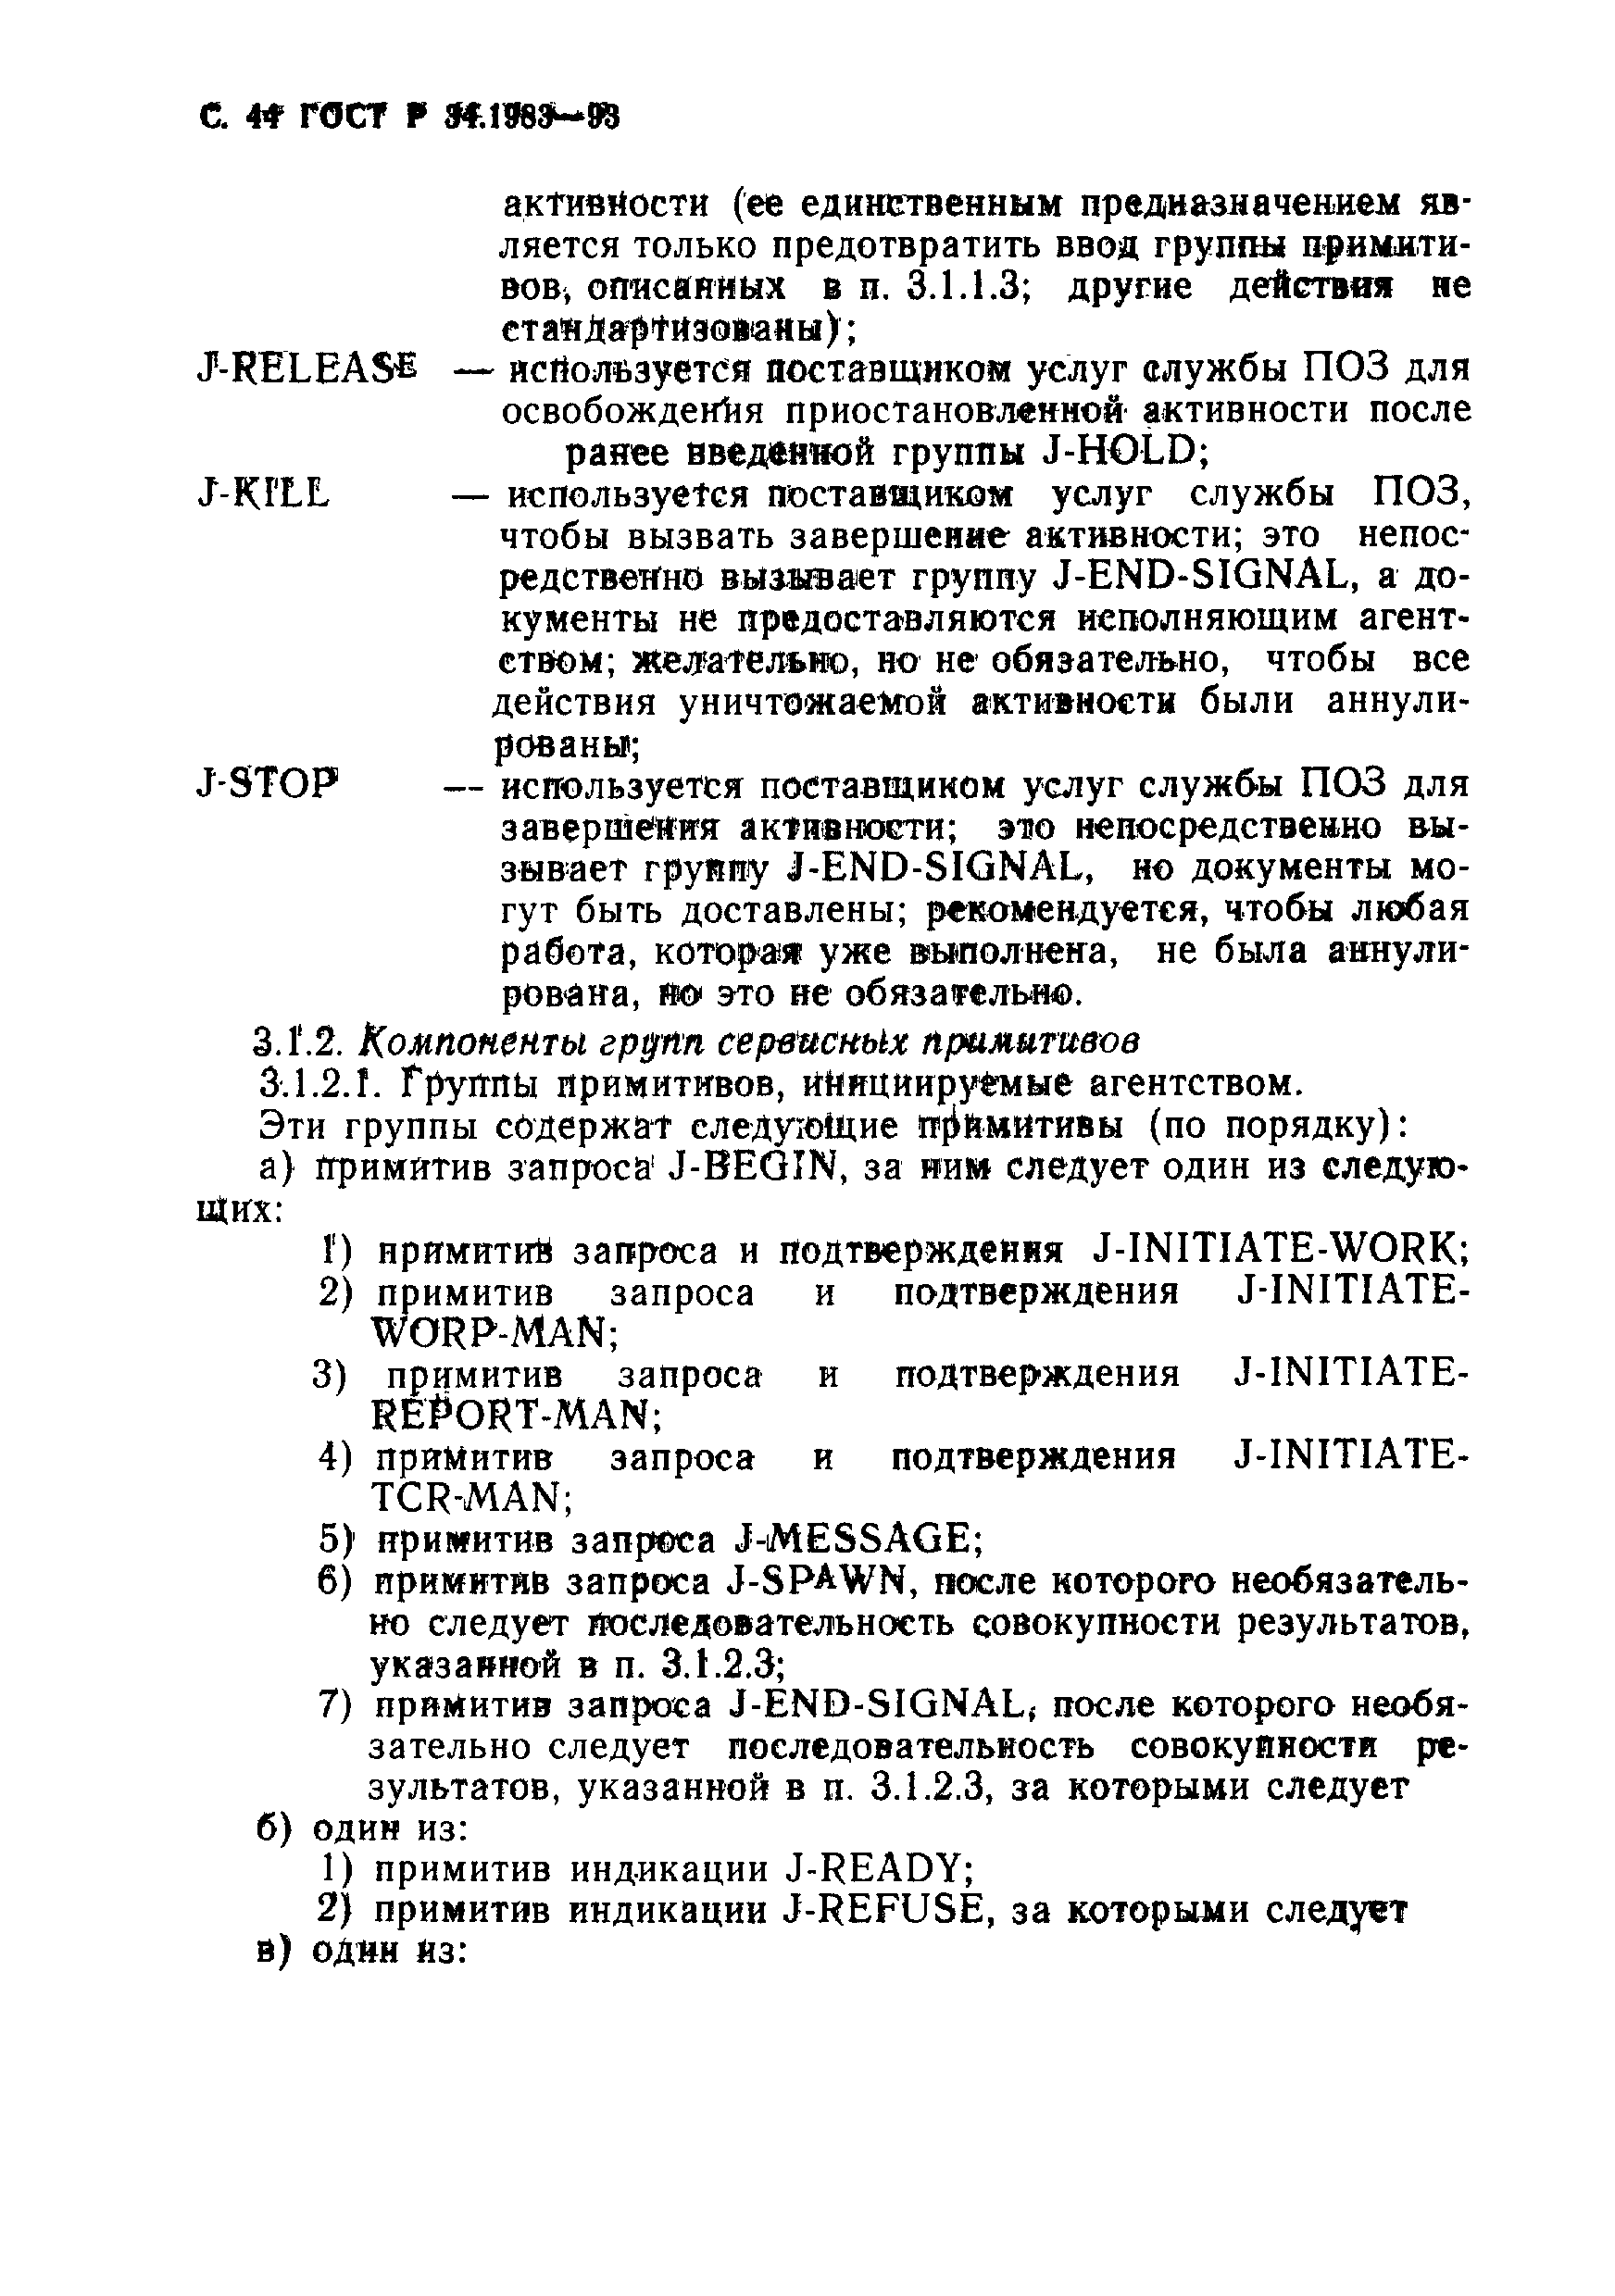 ГОСТ Р 34.1983-93